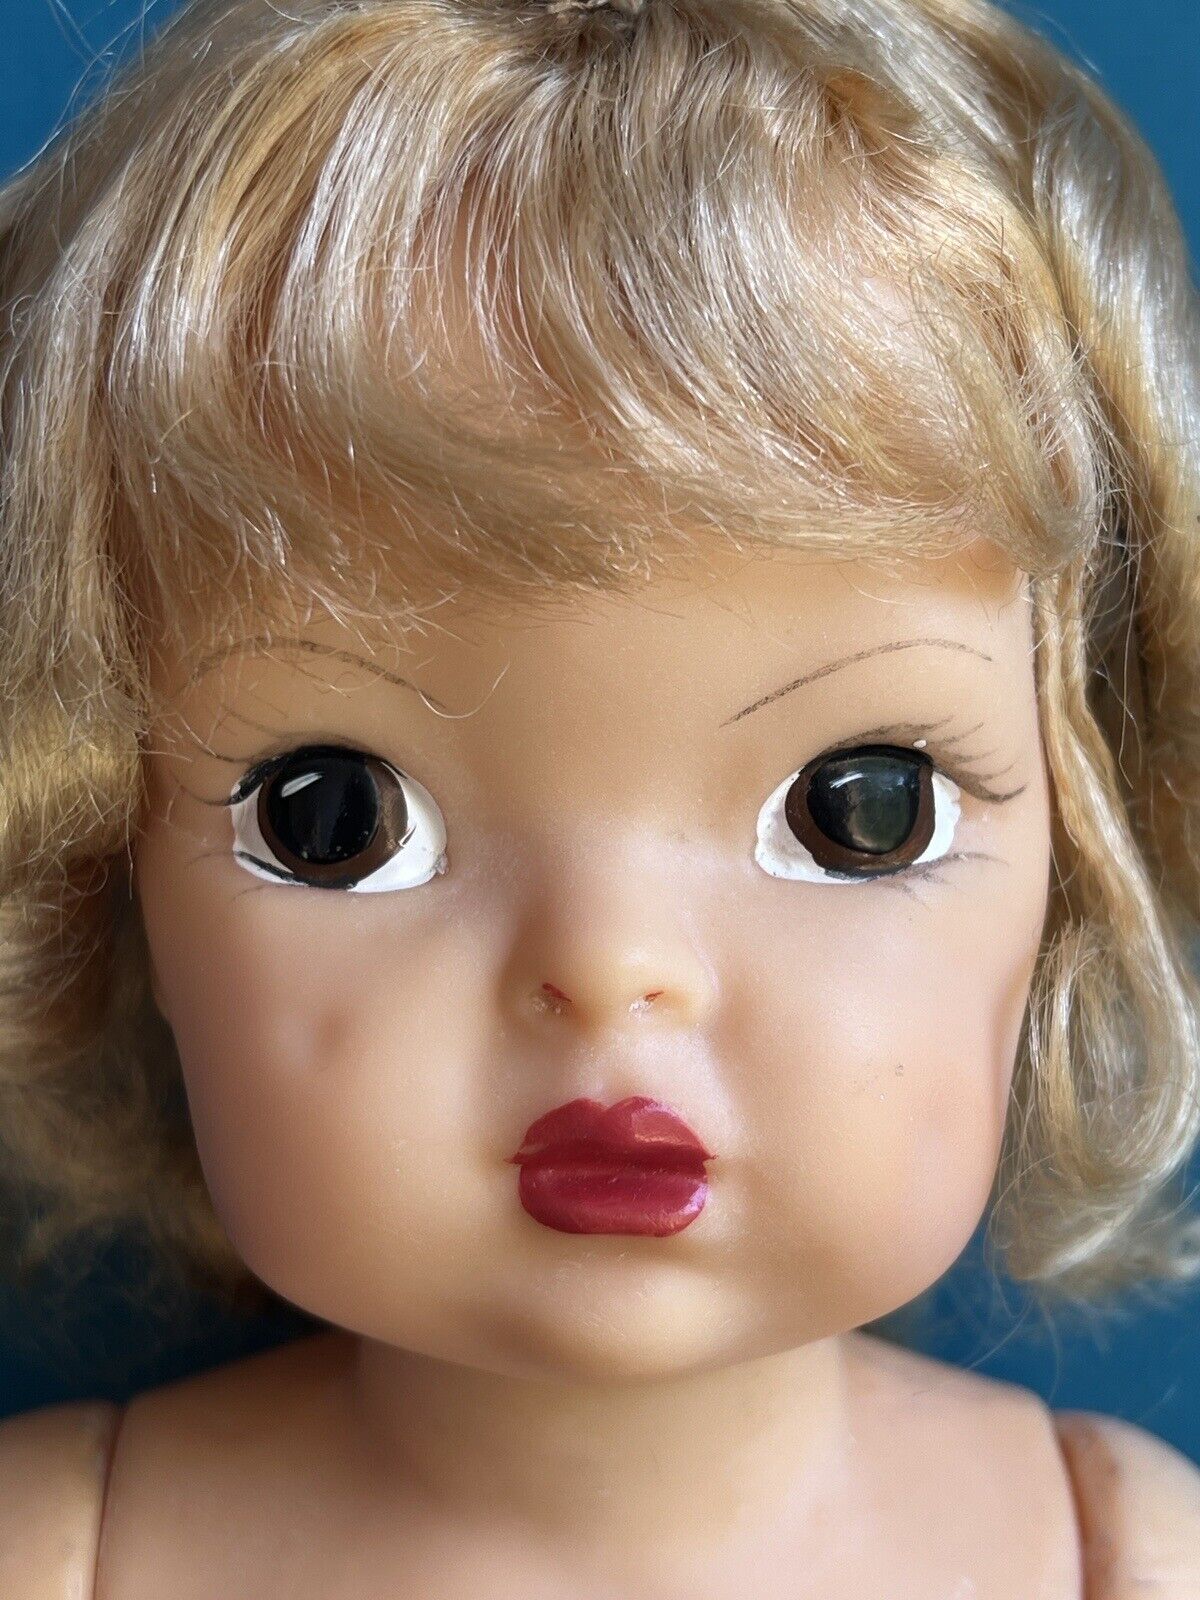 Vintage Early Hard Plastic Blonde Terri Lee Doll